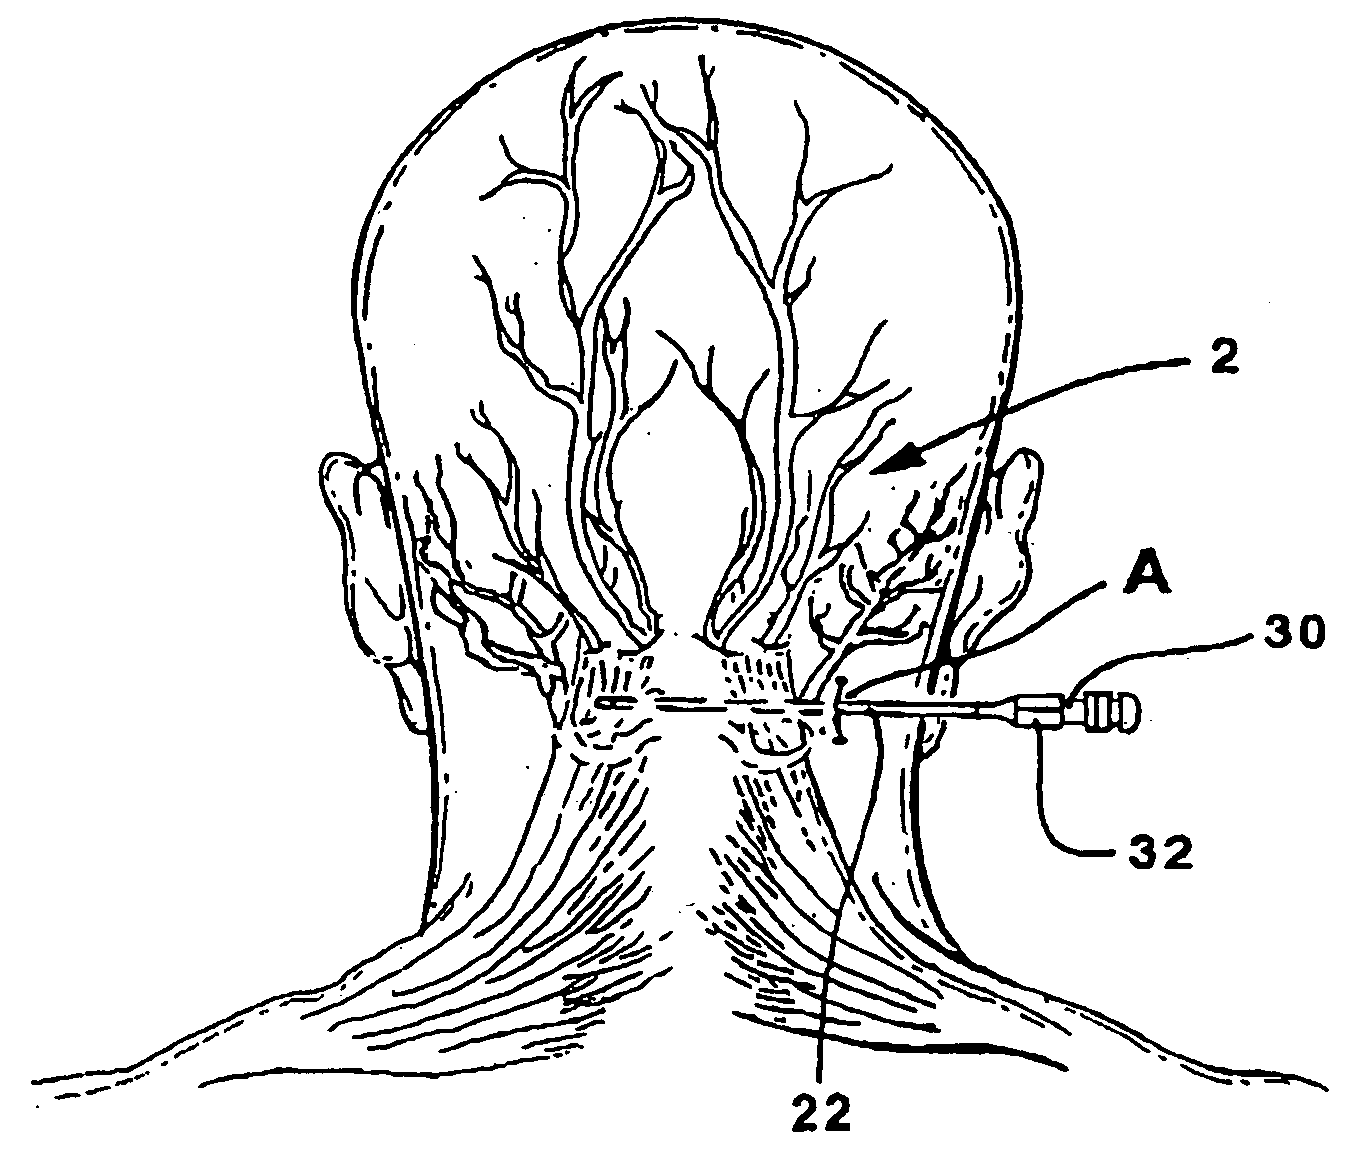 Peripheral nerve stimulation